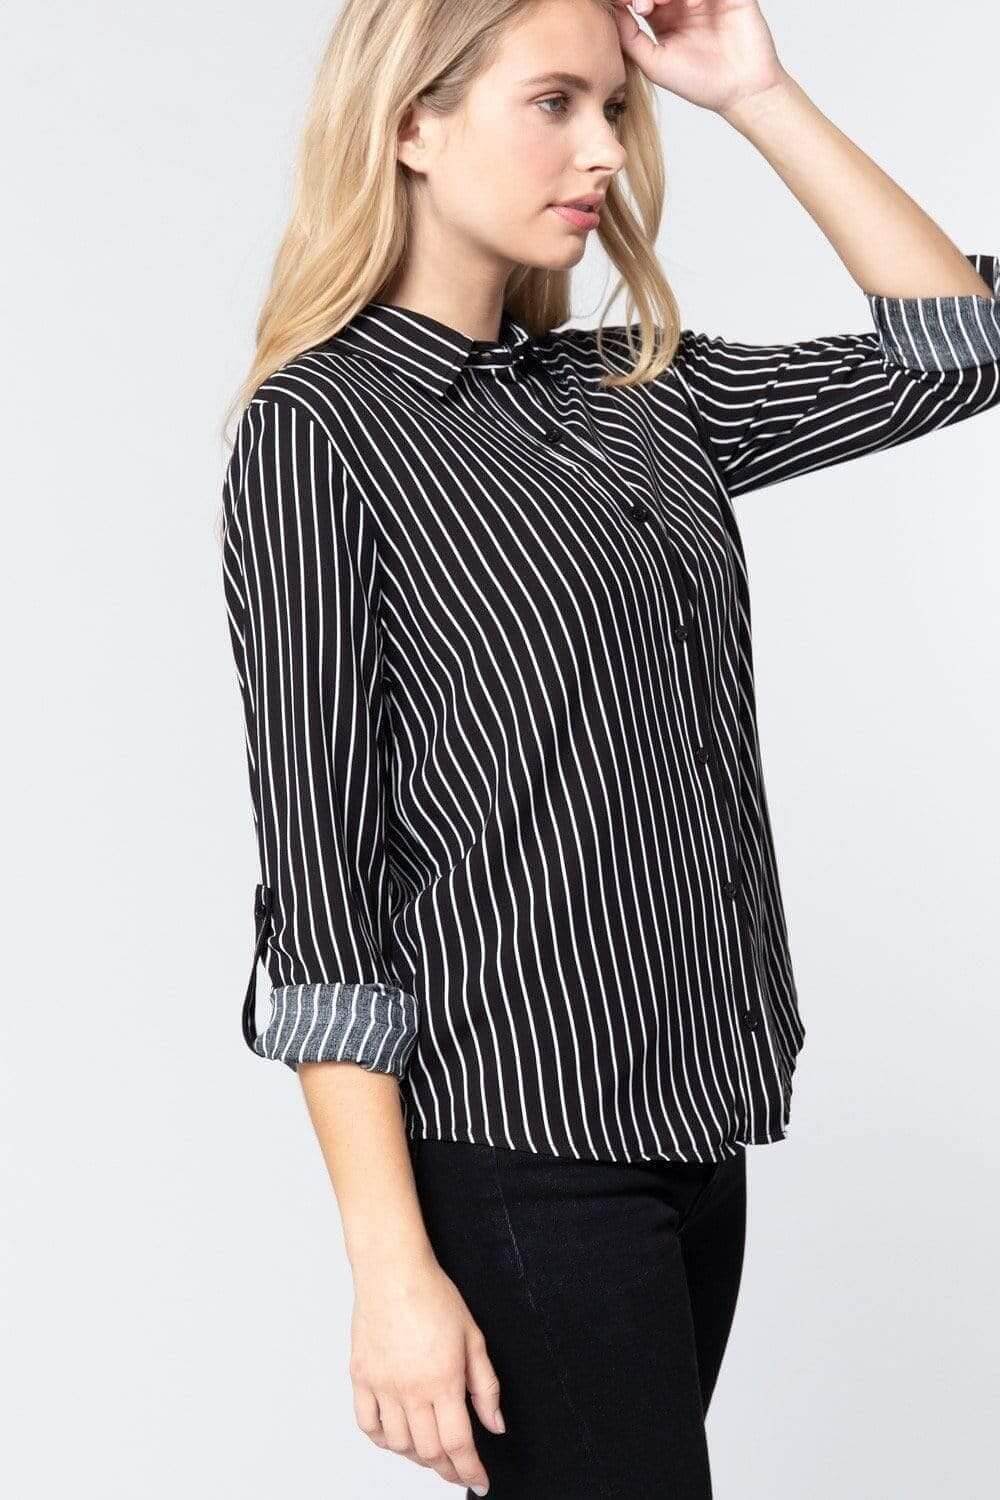 Black-White Roll Up Long Sleeve Stripe Shirt - Shopping Therapy, LLC Shirts & Tops